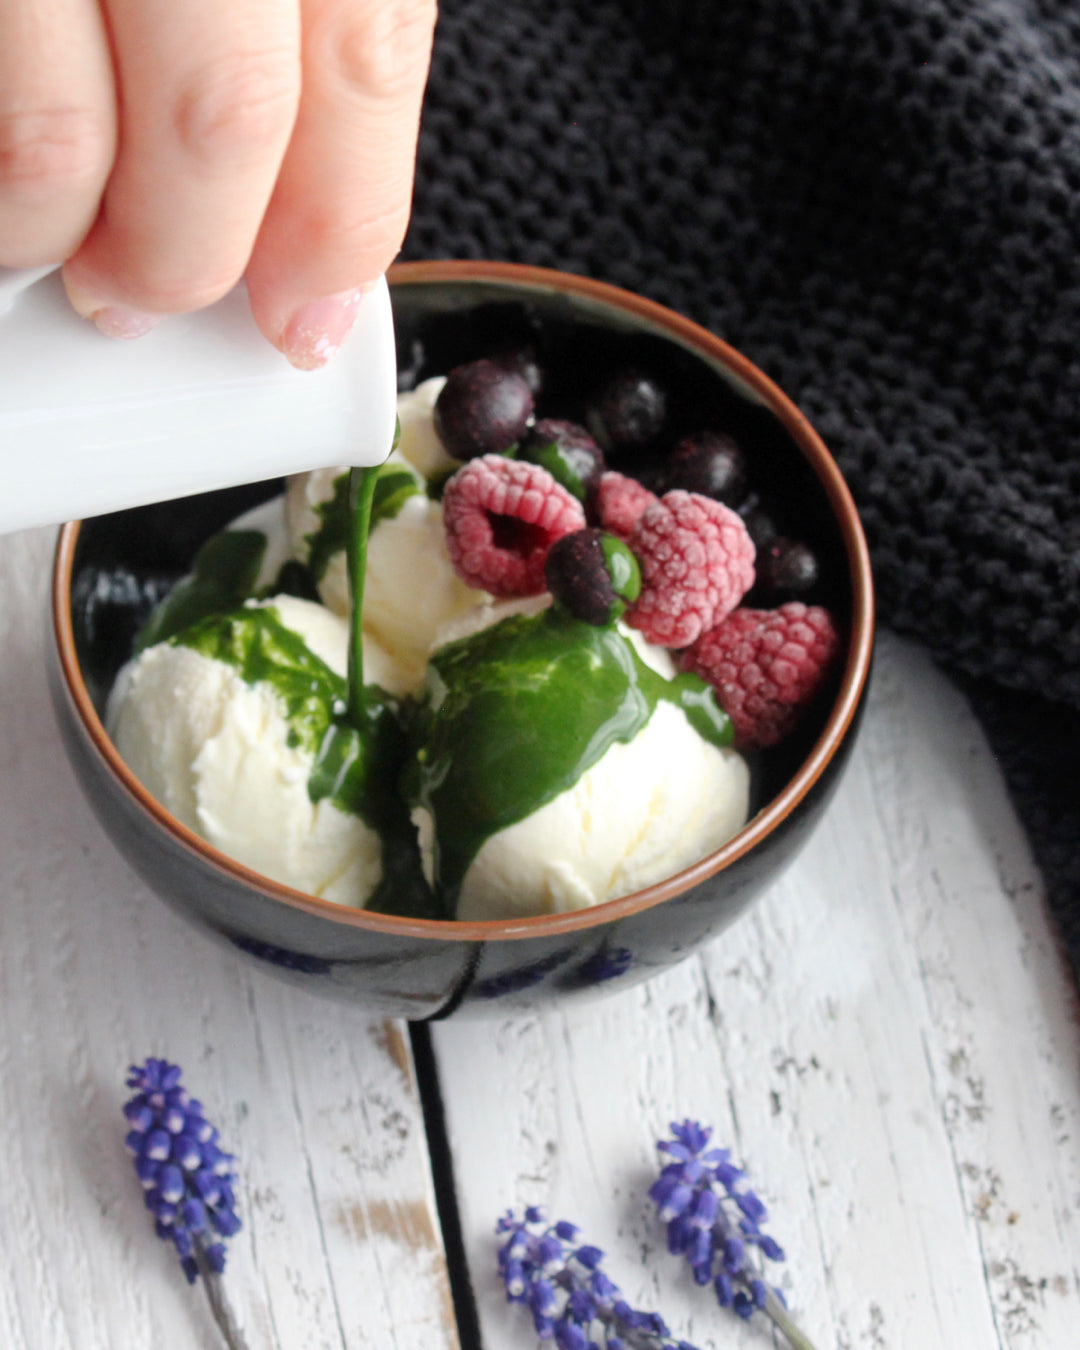 Matcha and Ice Cream with Berries by Wabi Matcha